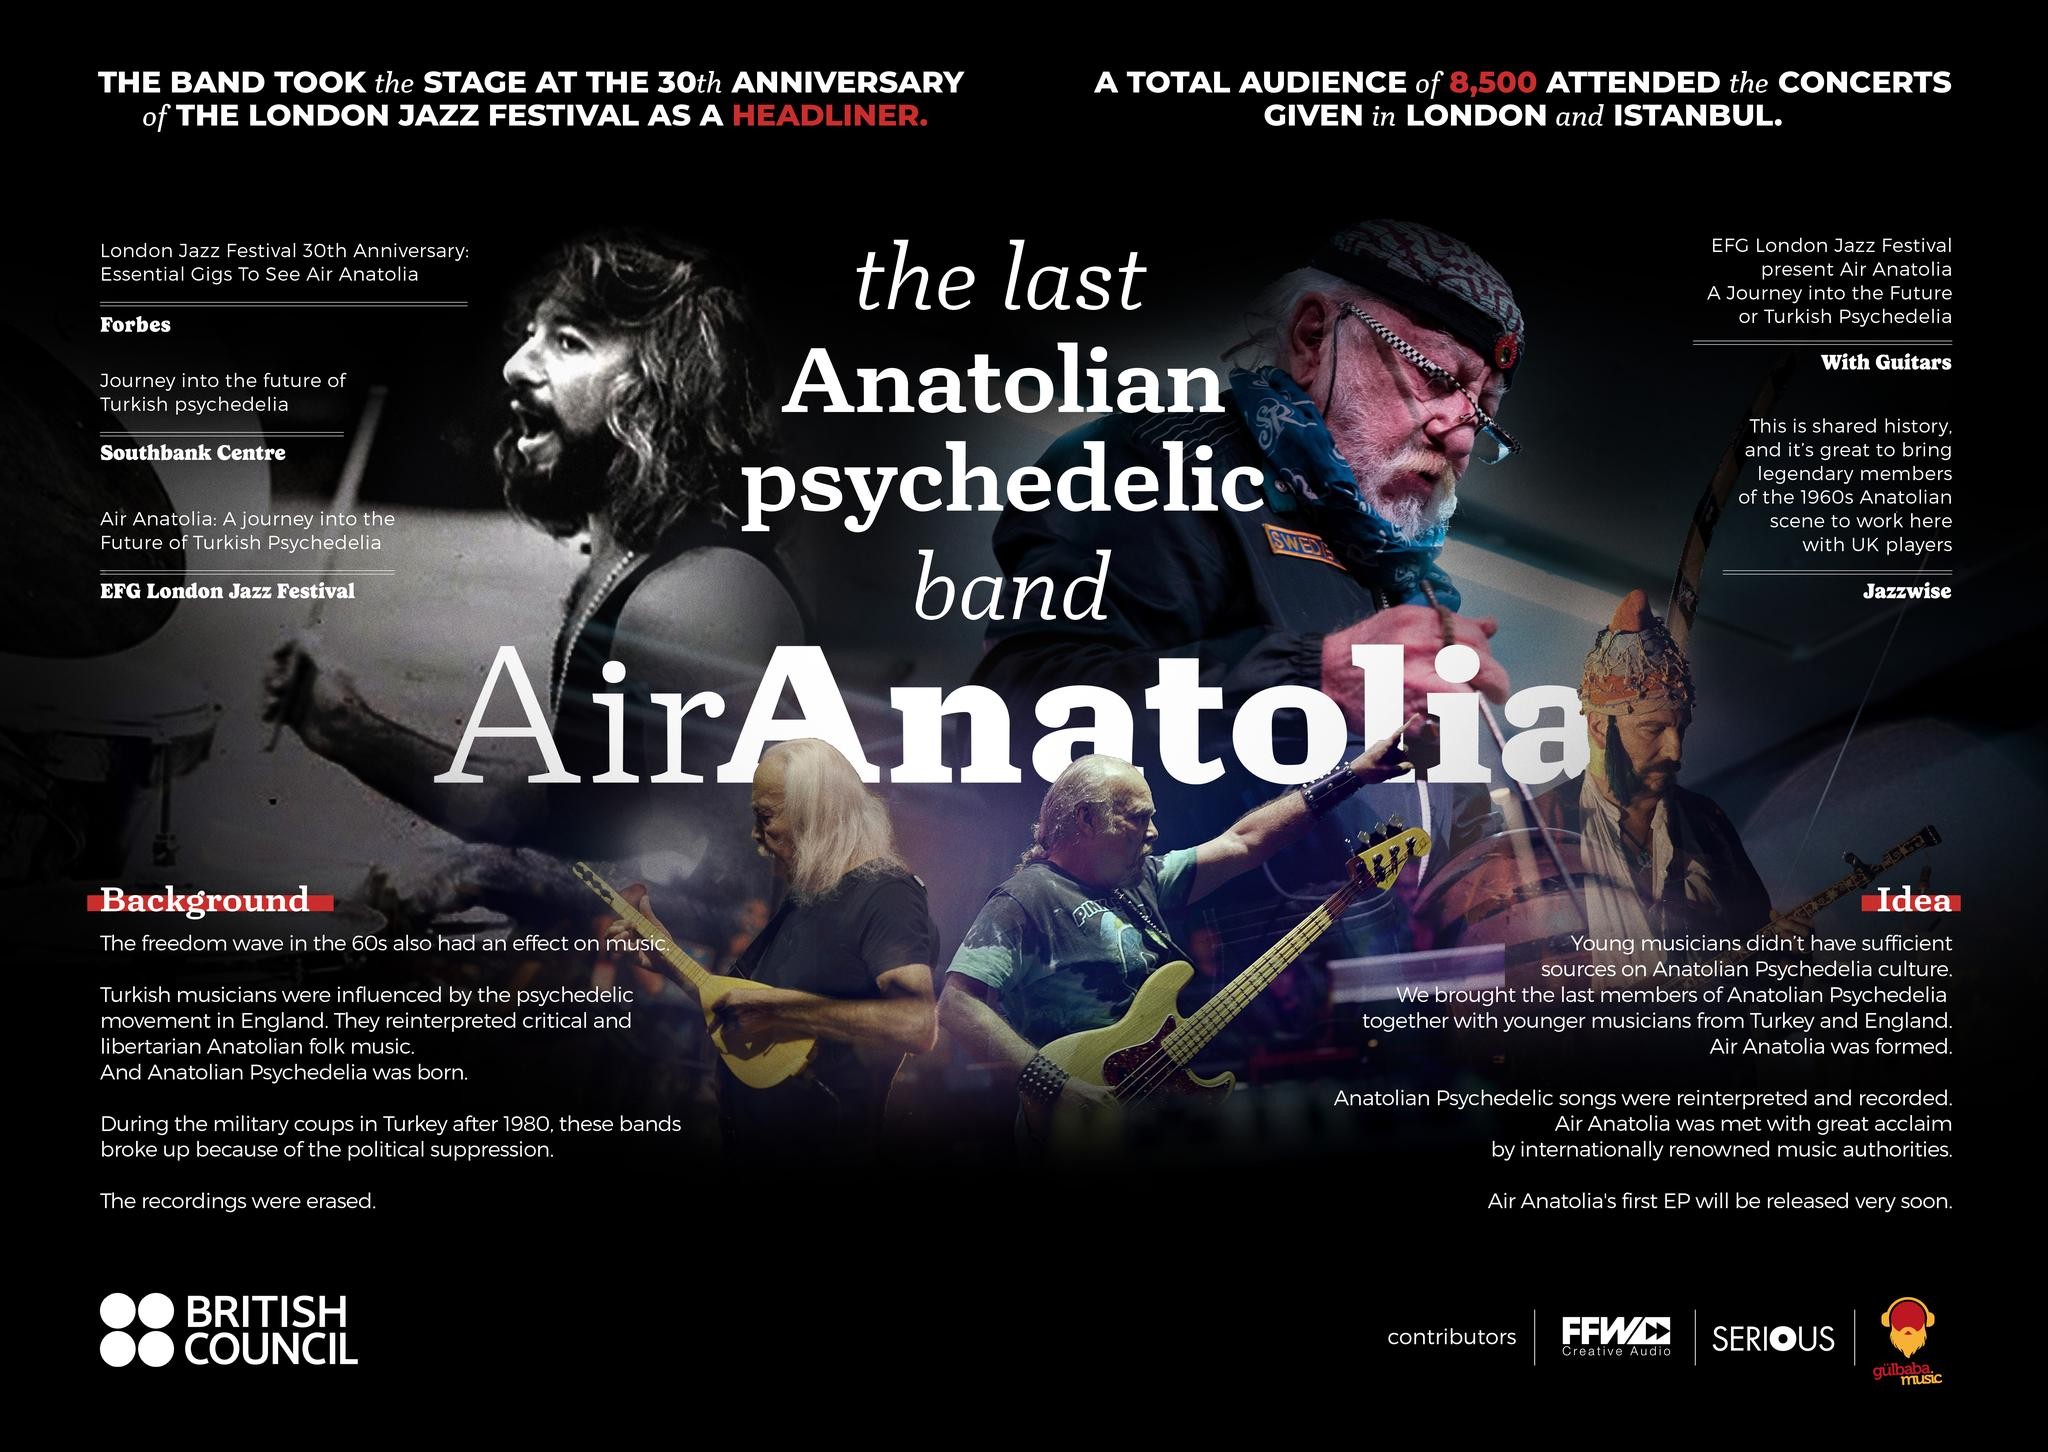 Air Anatolia: The Last Anatolian Psychedelic Band